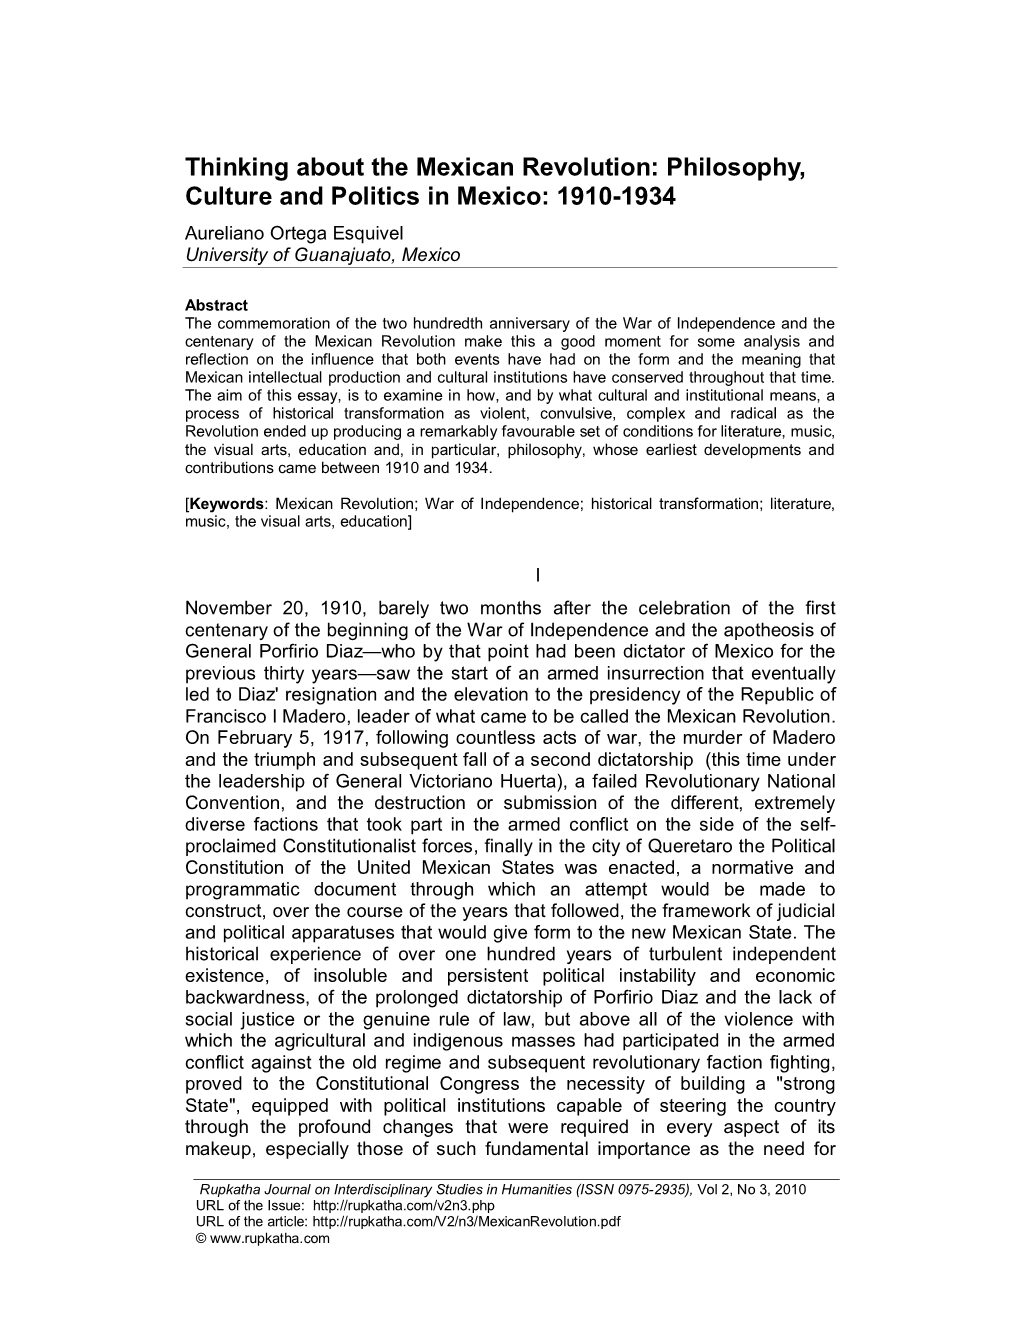 Philosophy, Culture and Politics in Mexico: 1910-1934 Aureliano Ortega Esquivel University of Guanajuato, Mexico